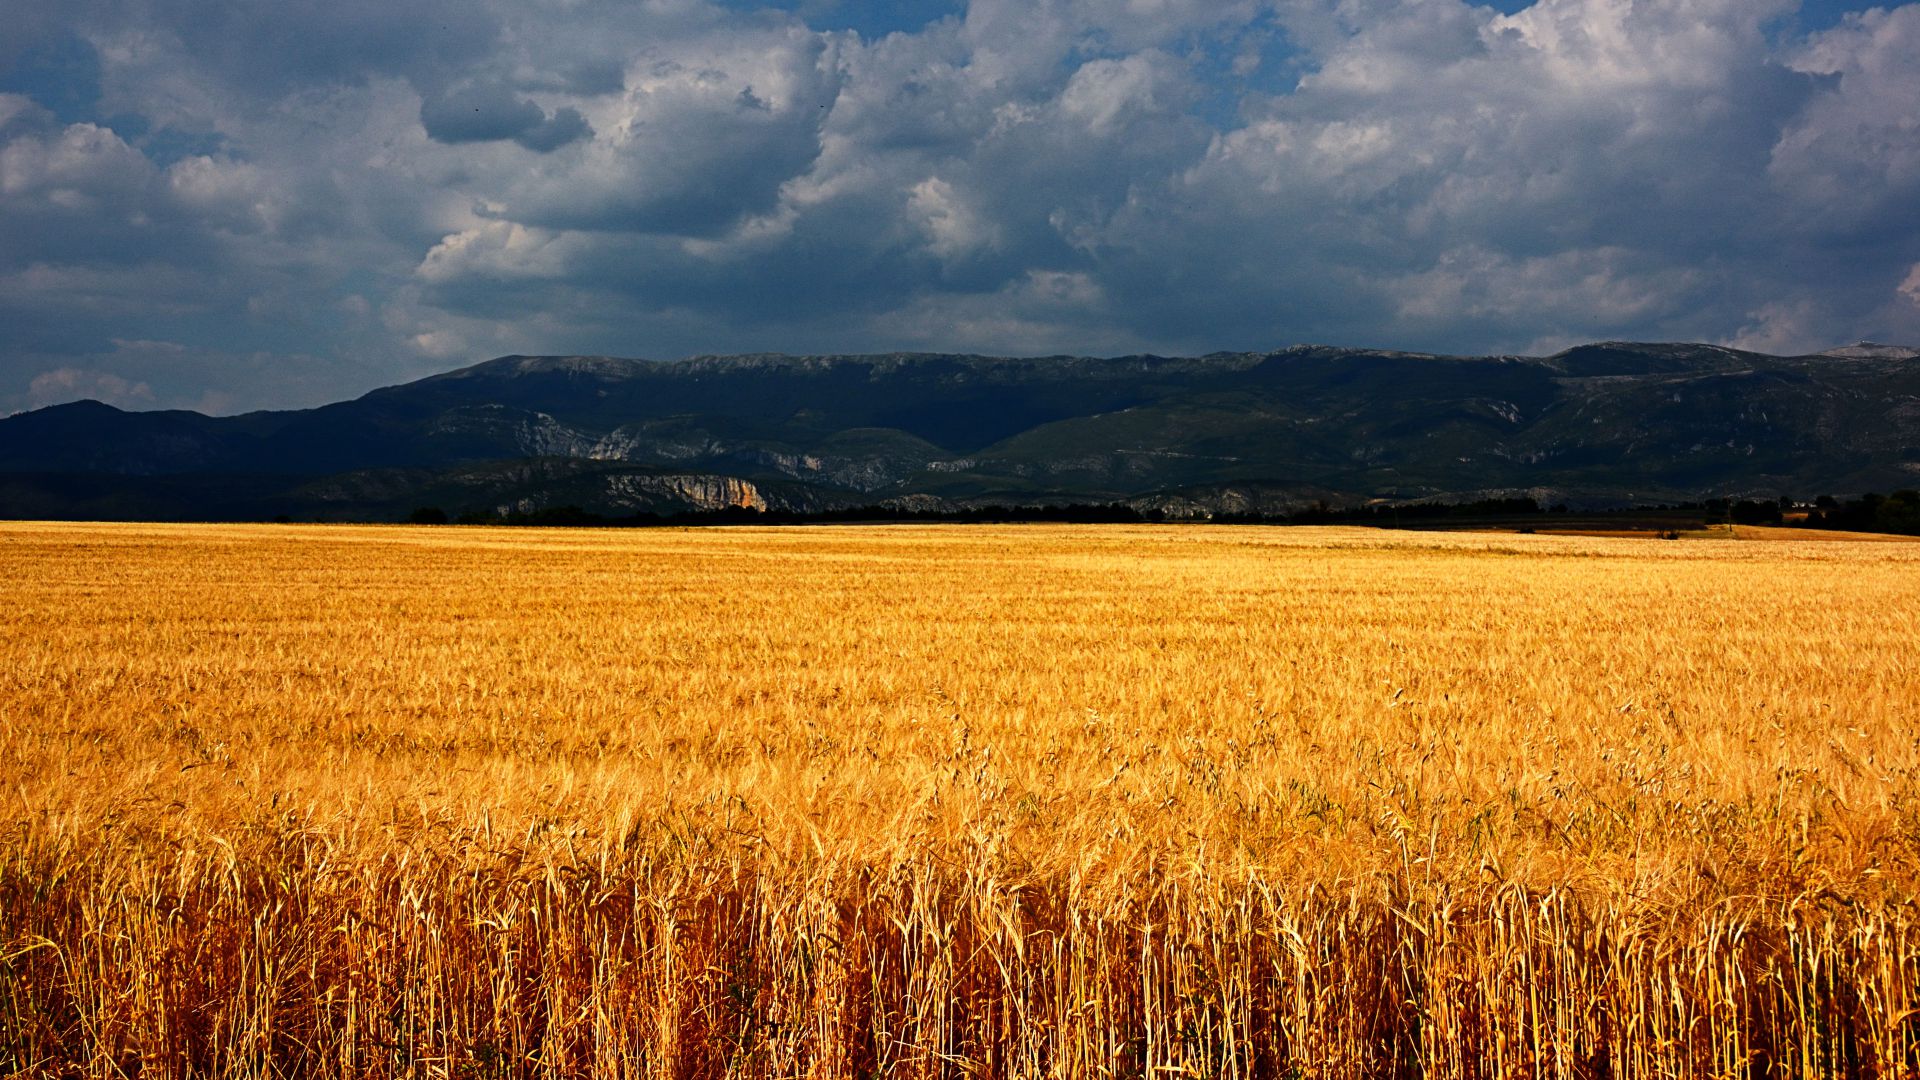 Плато-де-Валенсоль, 5k, 4k, 8k, Франция, луга, пшеница, облака, Plateau de Valensole, 5k, 4k wallpaper, 8k, France, meadows, wheat, clouds (horizontal)